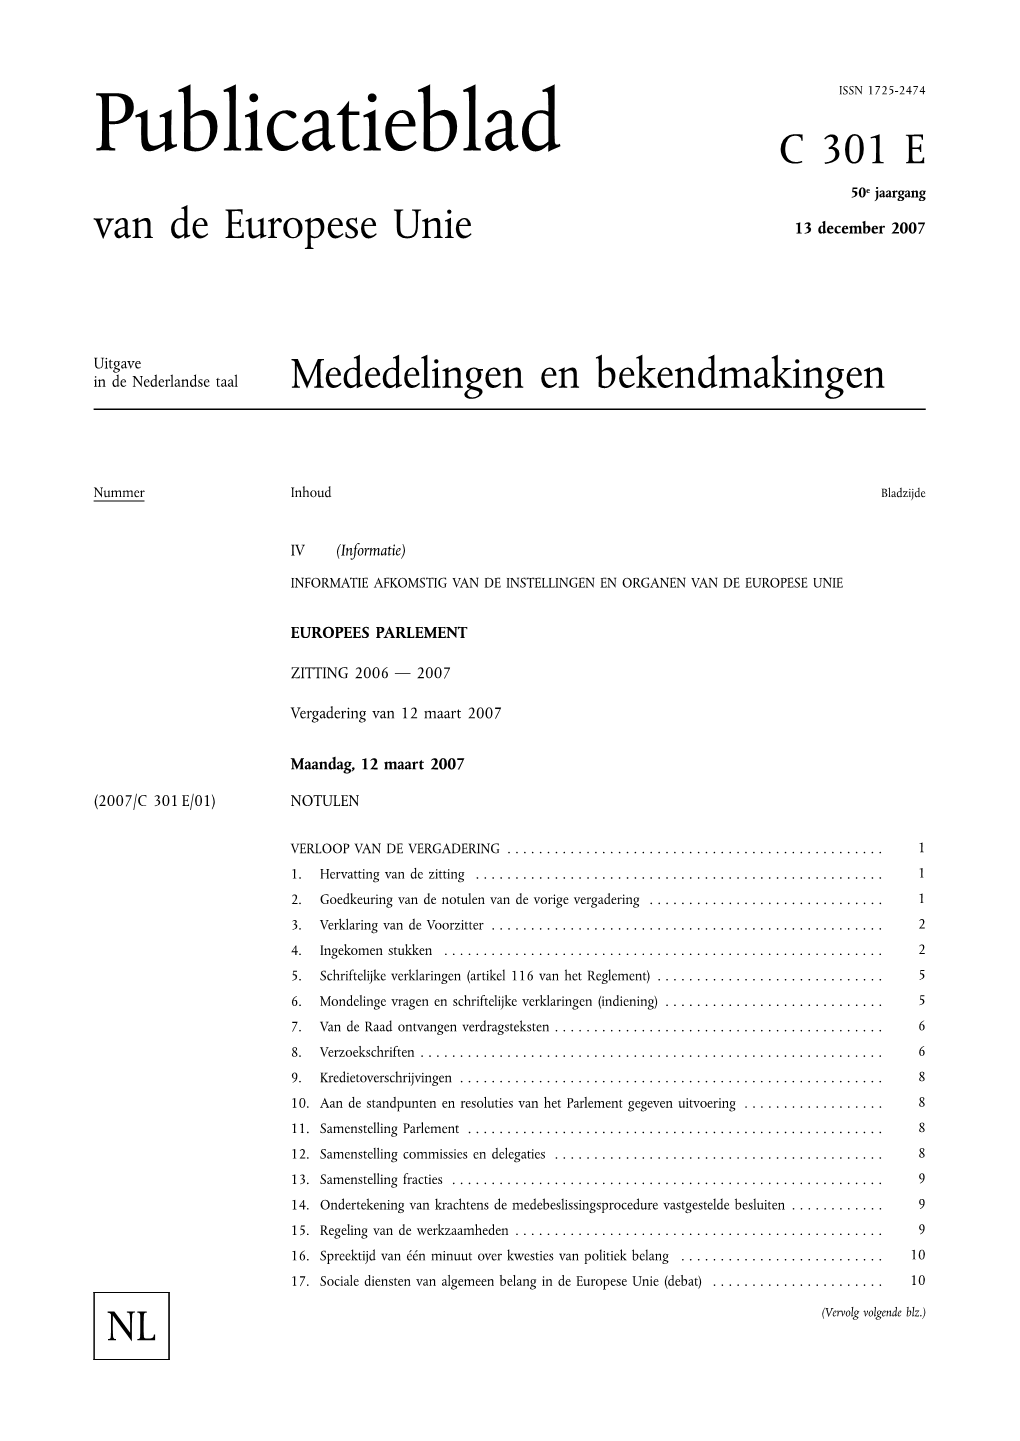 Publicatieblad C 301 E 50E Jaargang Van De Europese Unie 13 December 2007